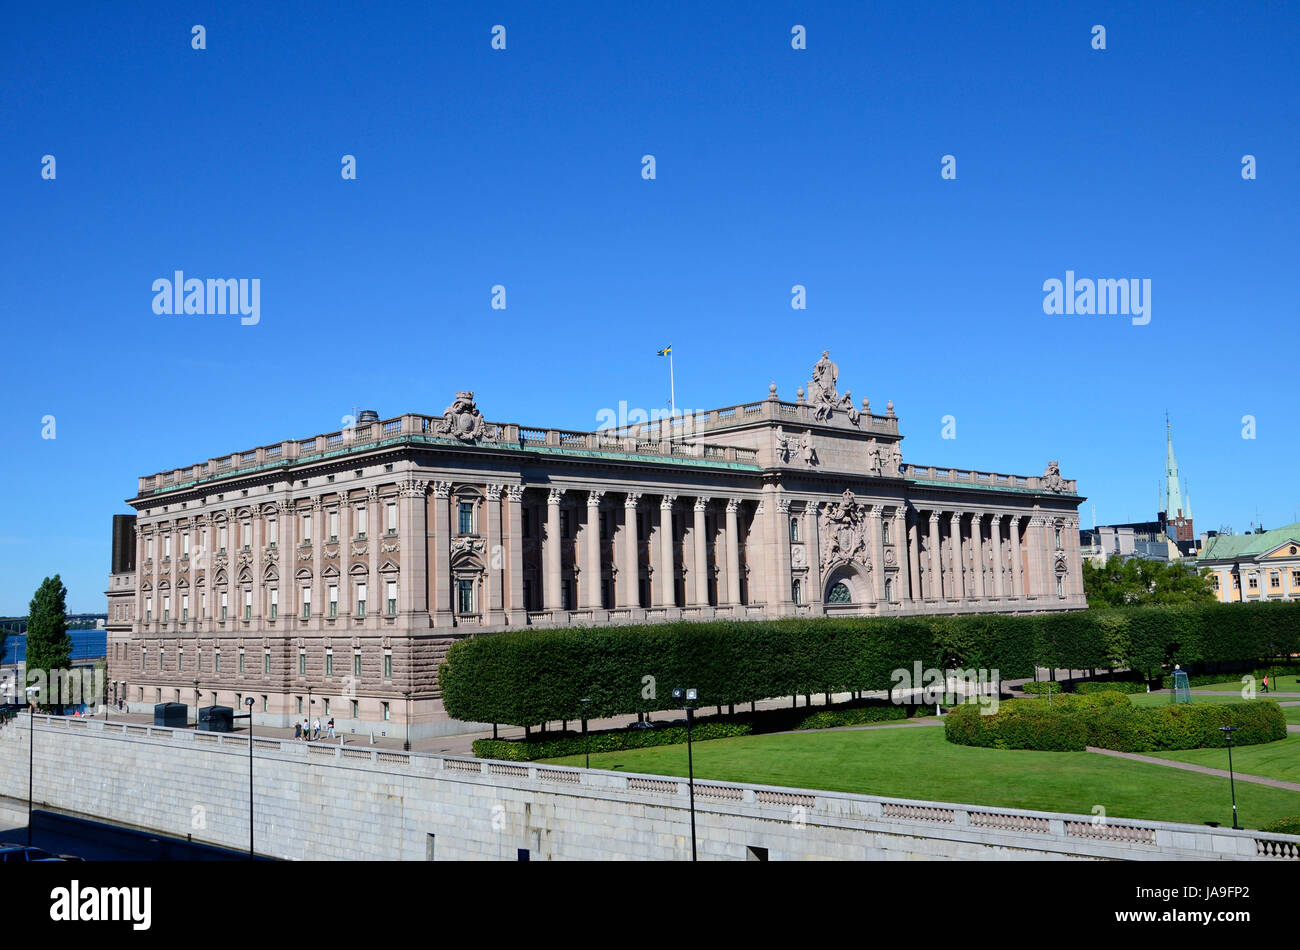 sweden, townscape, parliament, facade, stockholm, stockhom, scandinavia, Stock Photo